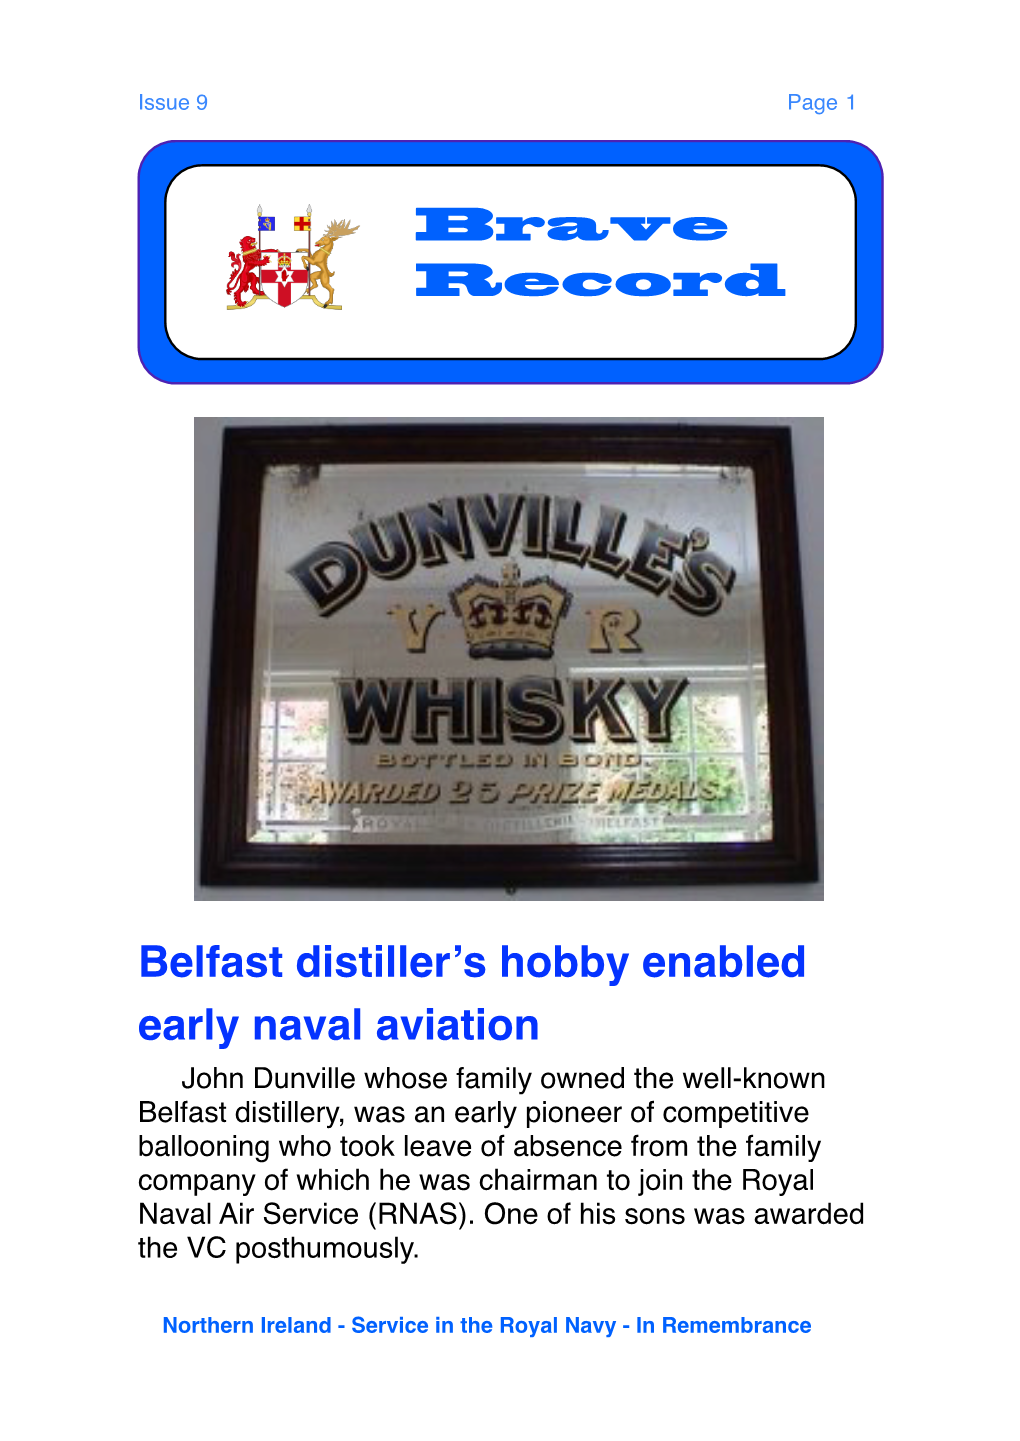 Belfast Distiller's Hobby Enabled Early Naval Aviation